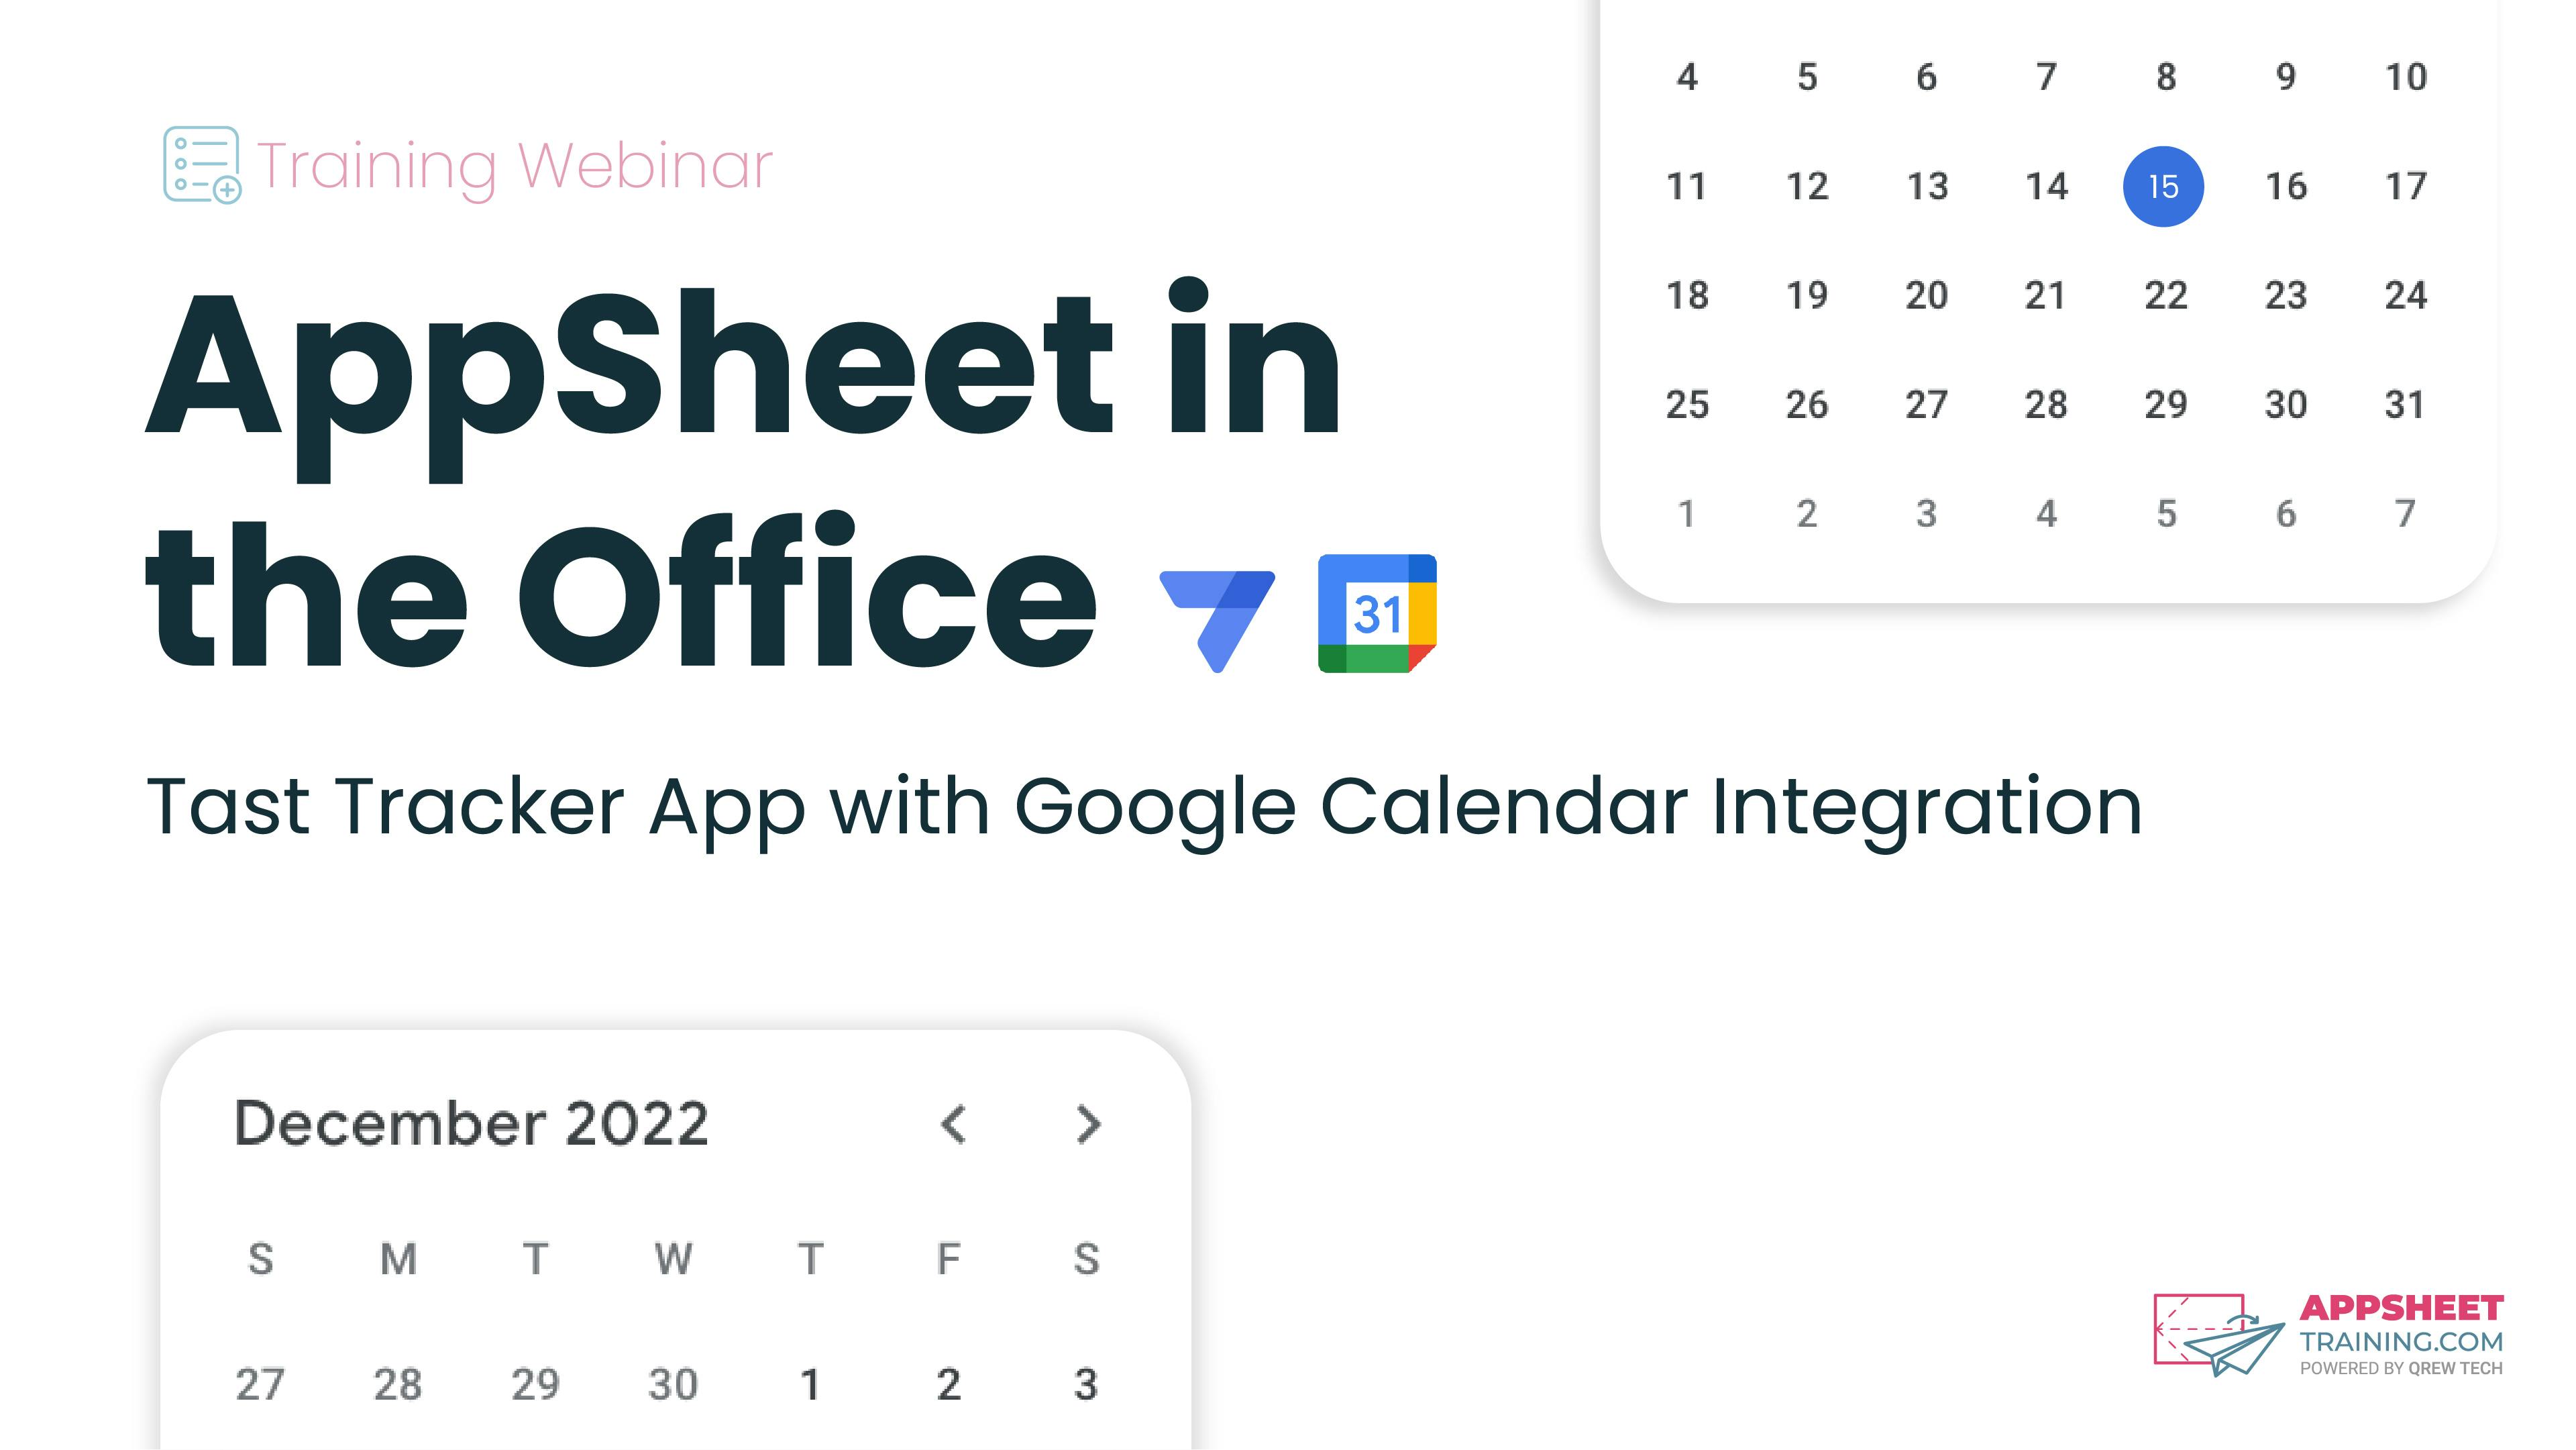 AppSheet in the Office Task Tracker App with Google Calendar Integration